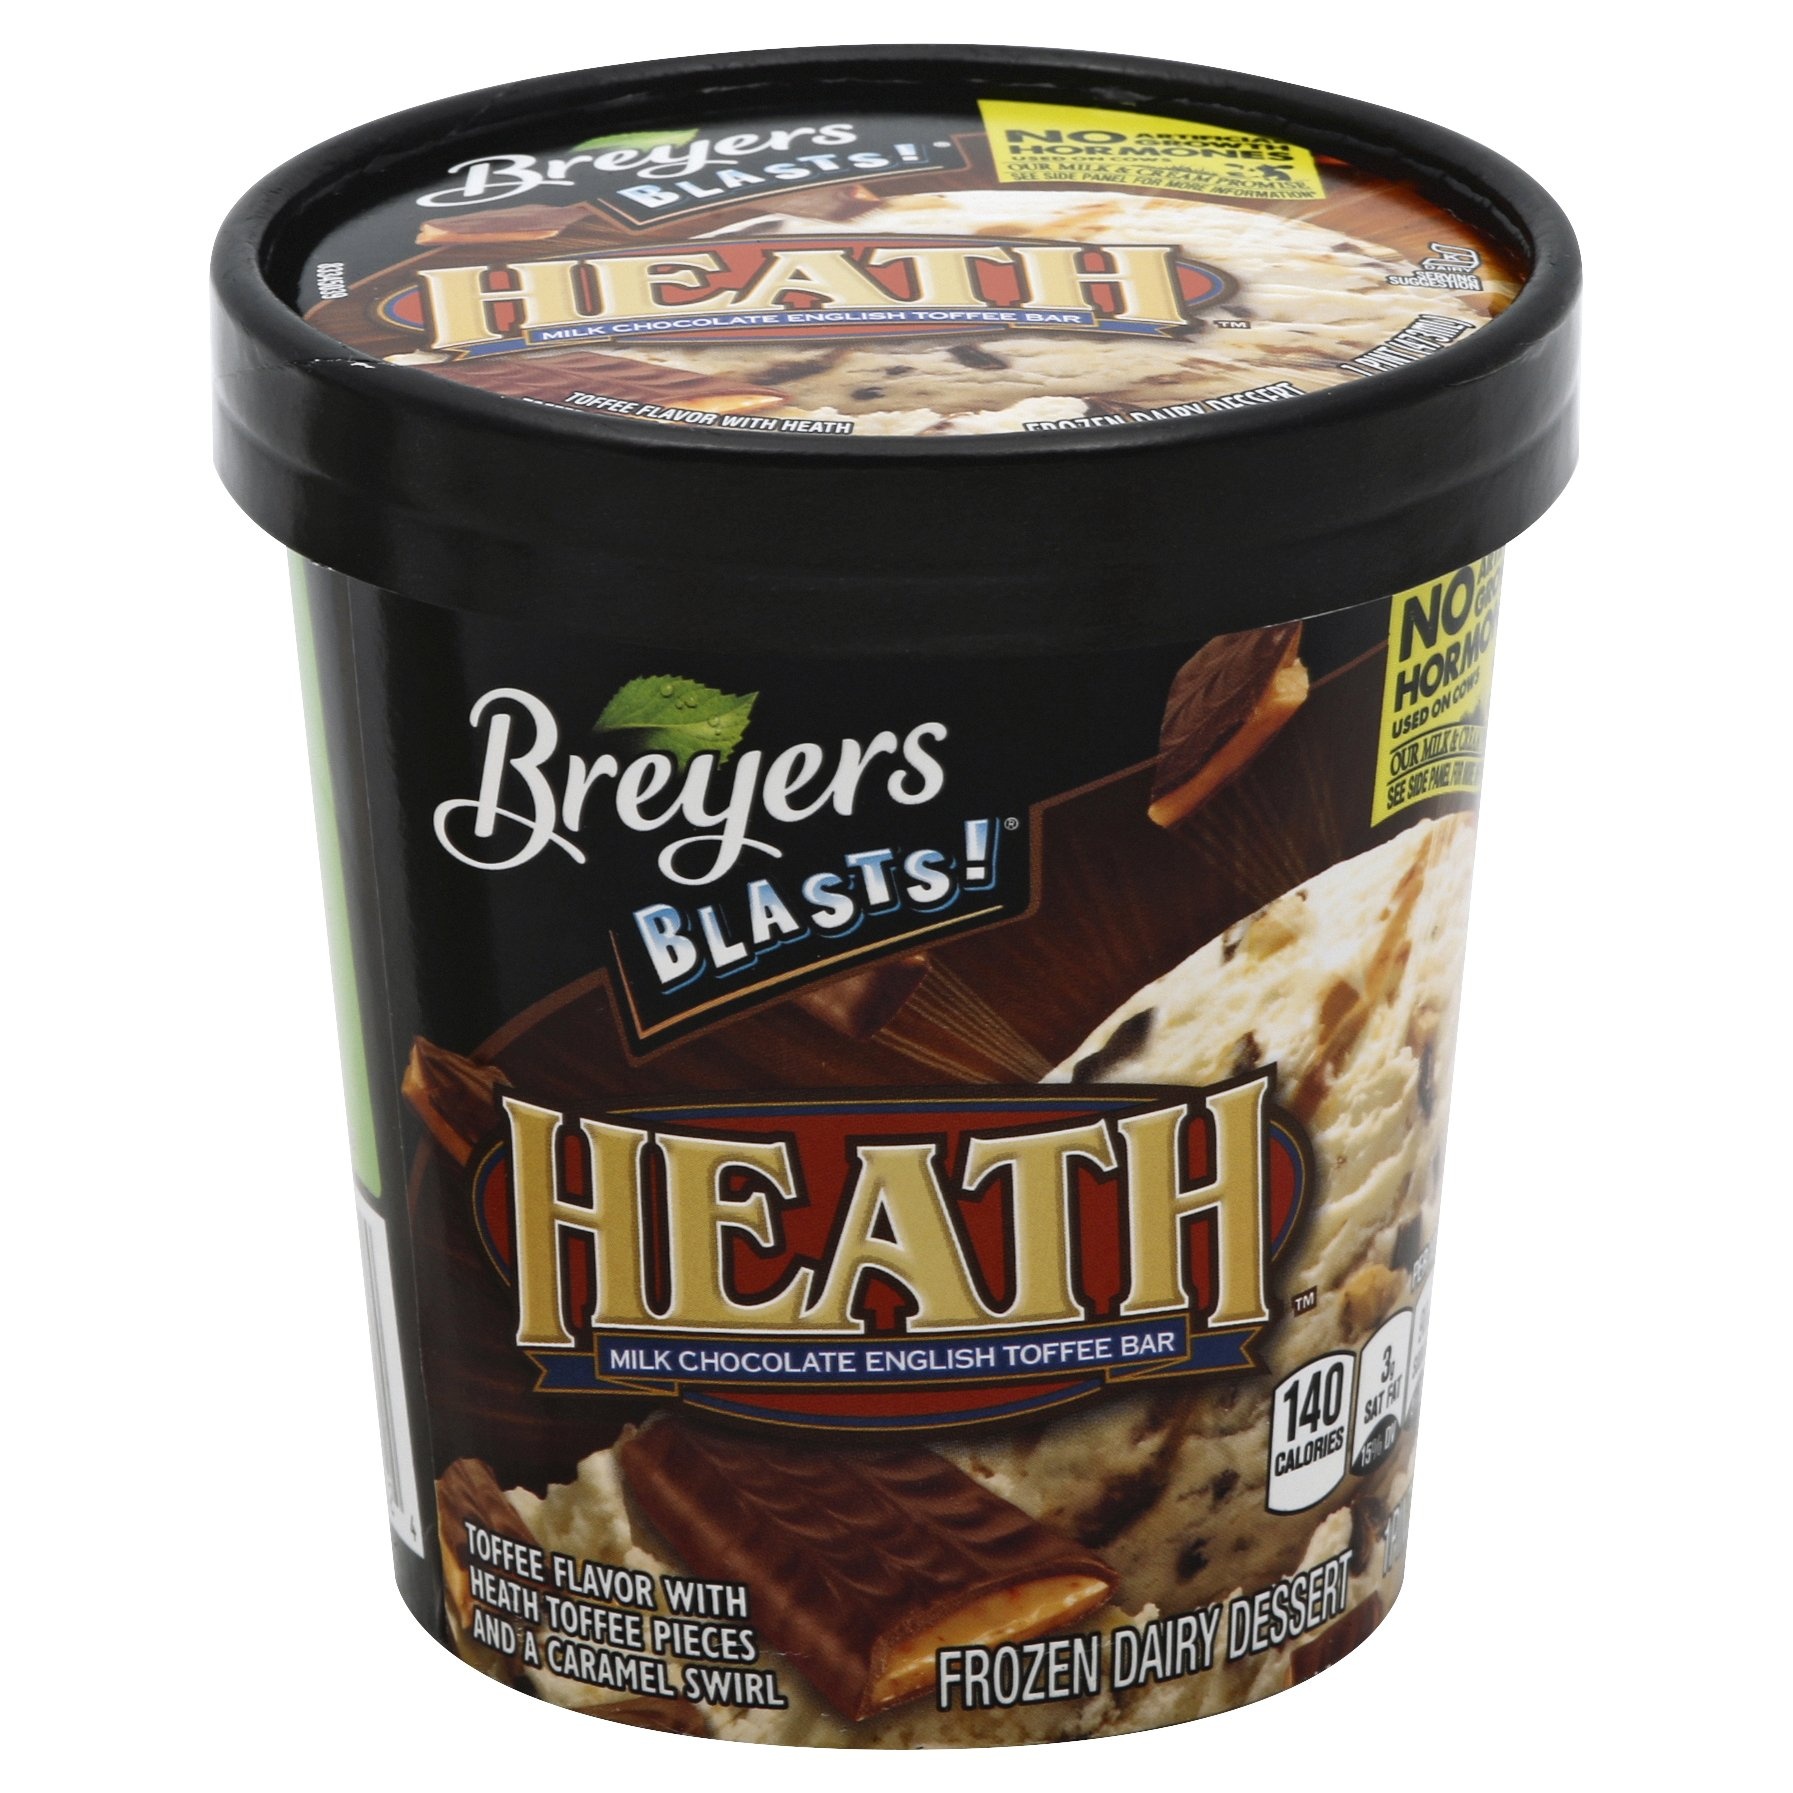 slide 1 of 1, Breyer's Blasts! Heath Mix Chocolate English Toffee Bar Ice Cream, 16 oz